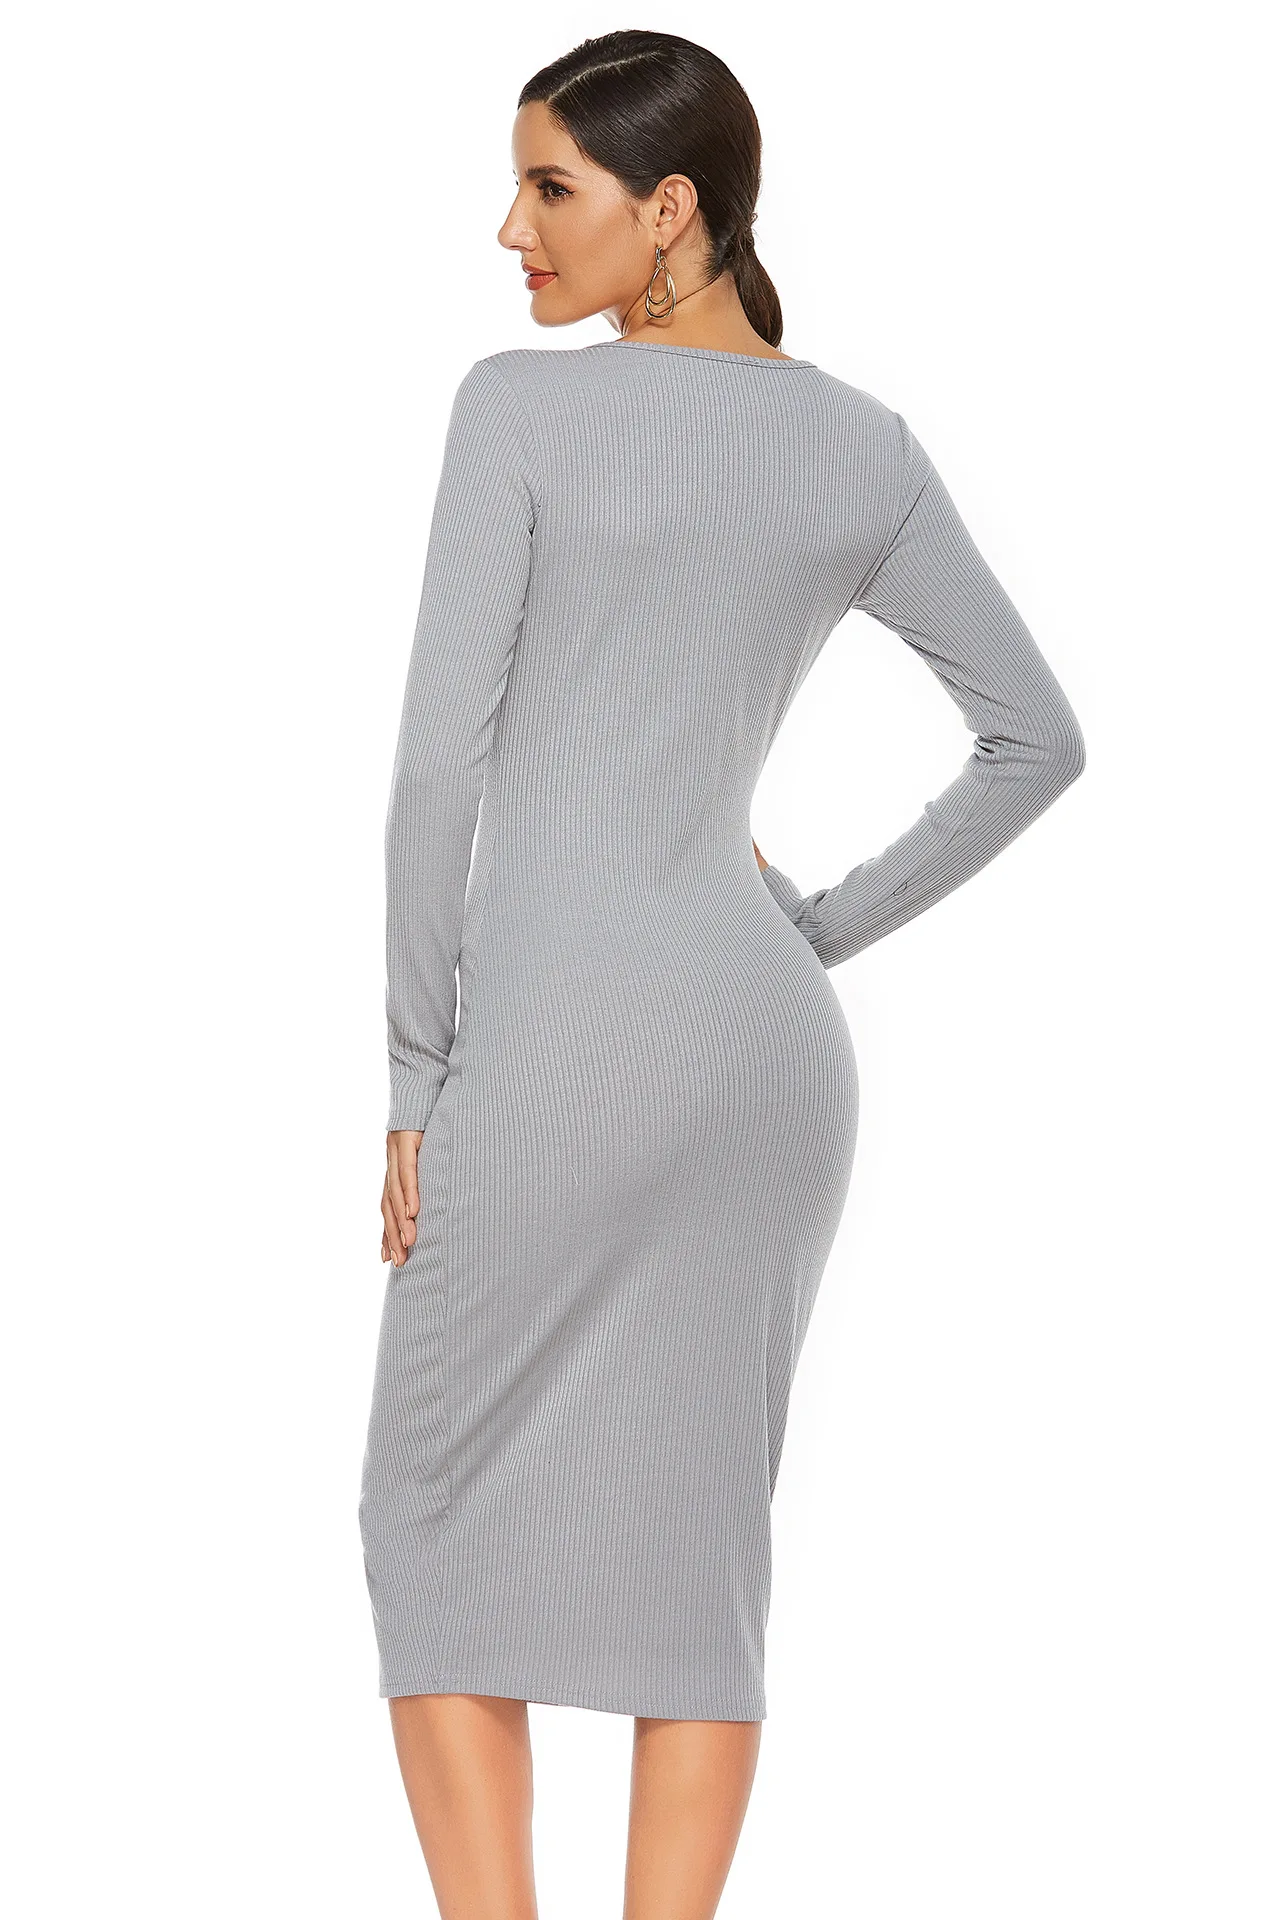 2020 Autumn Wholesale New Fashion Women Round Neck MIDI Dress Casual Slim Pure Color Leisure Slim Dress with Bottom